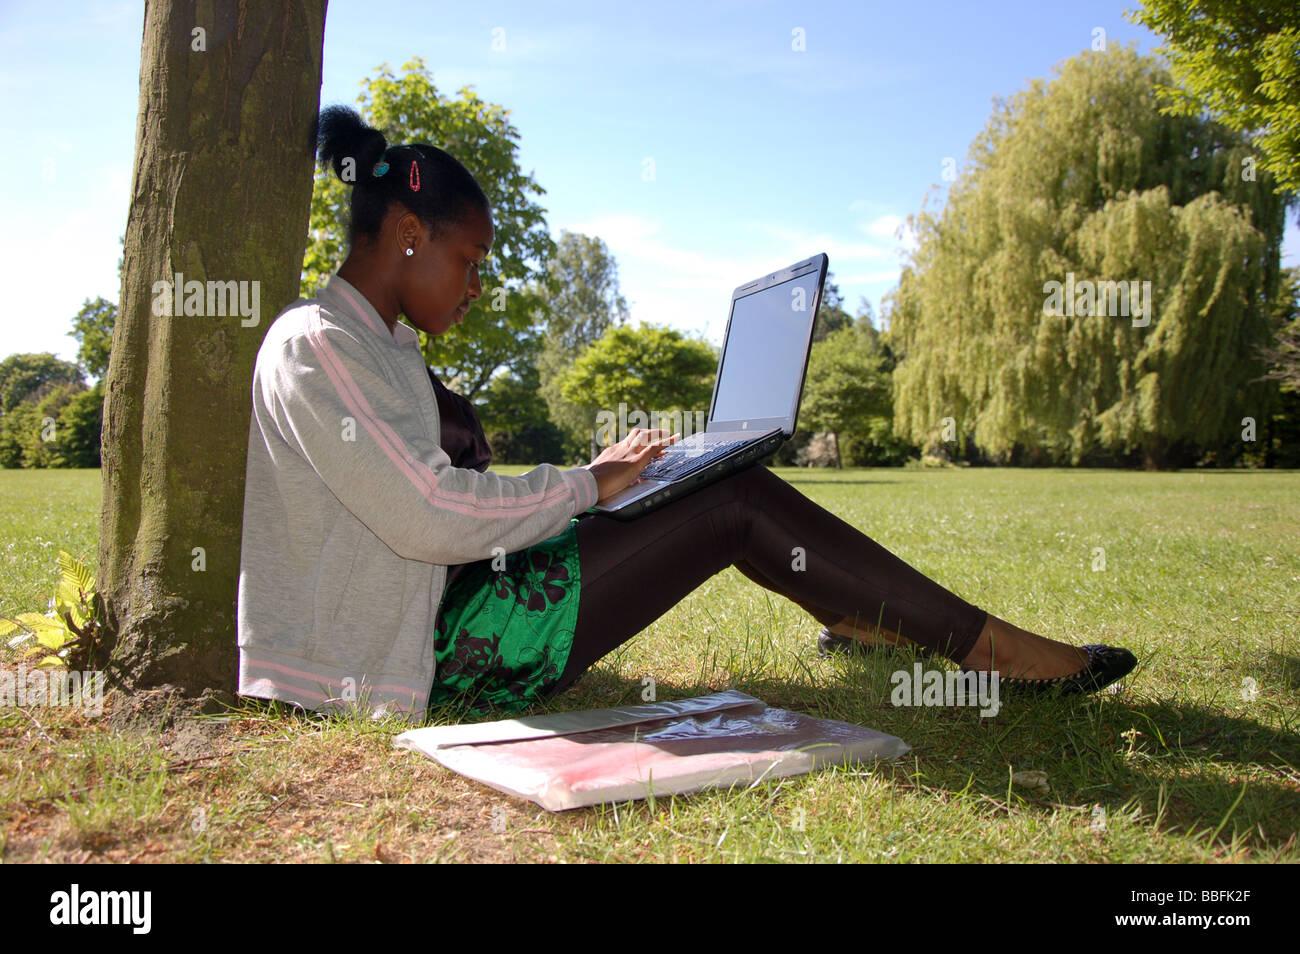 Jeune fille studing in park. Banque D'Images